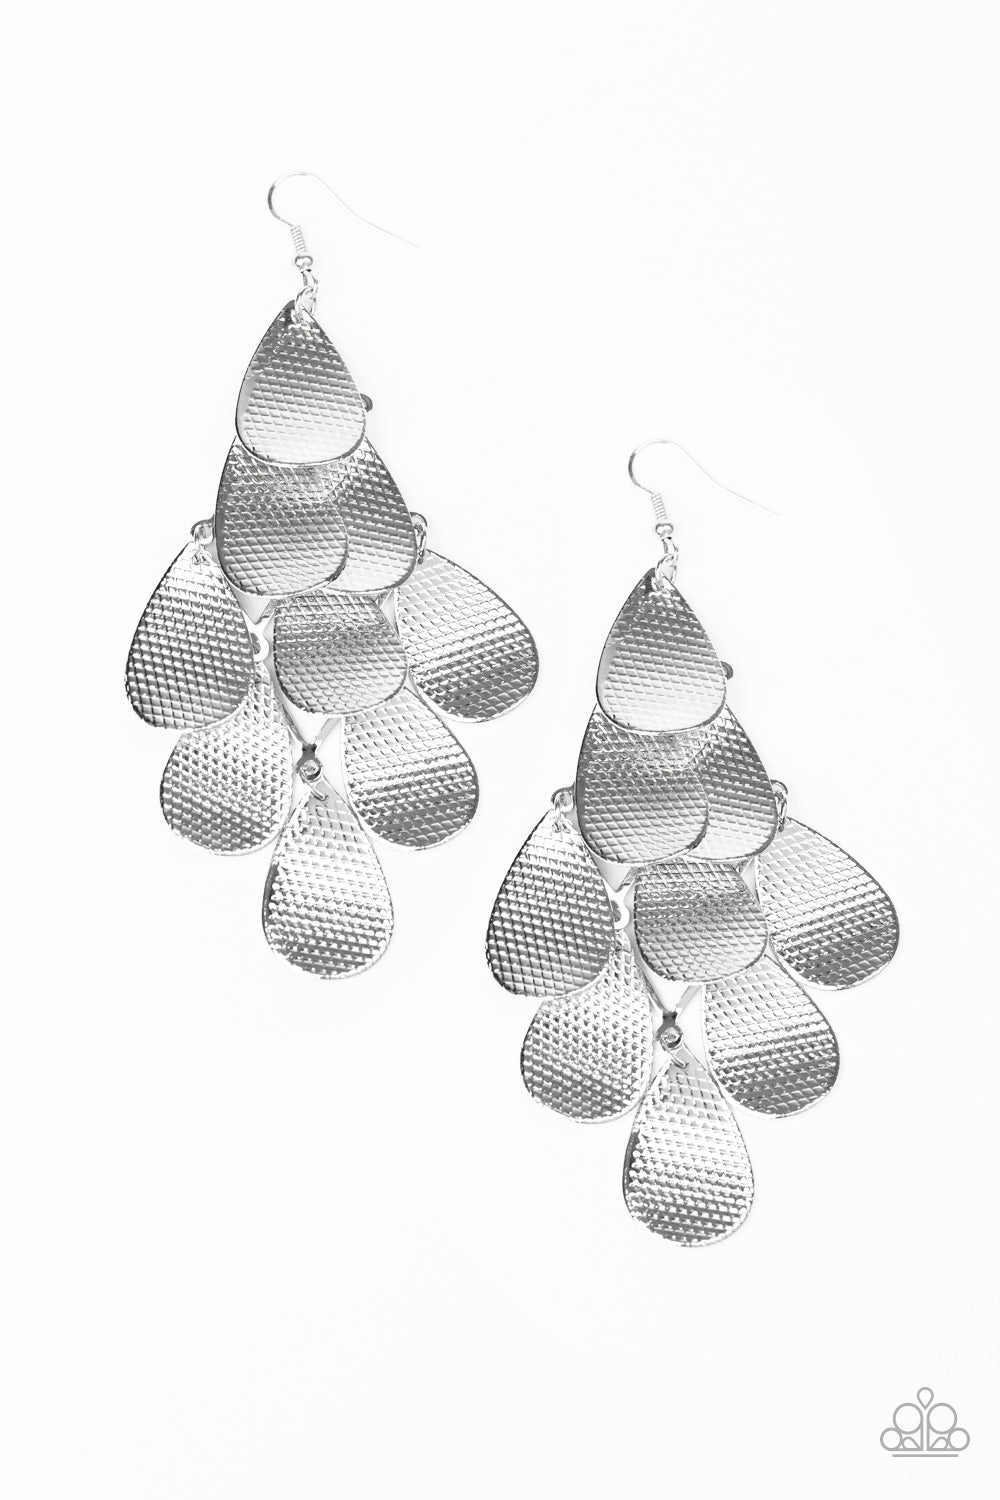 Iconic Illumination - Silver Earrings